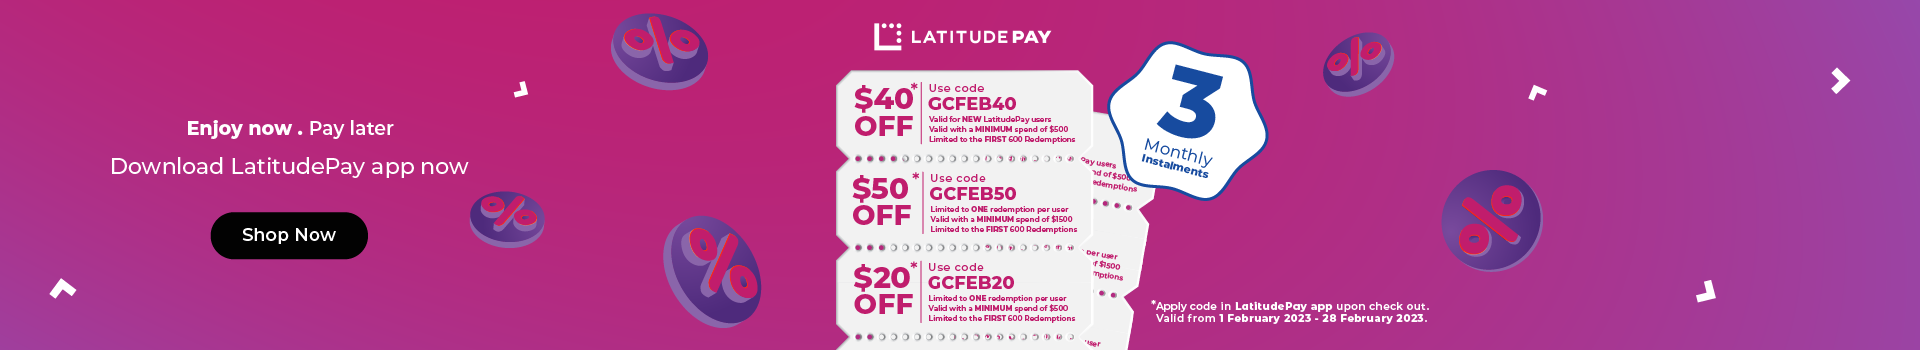 LatitudePay Promotion Feb